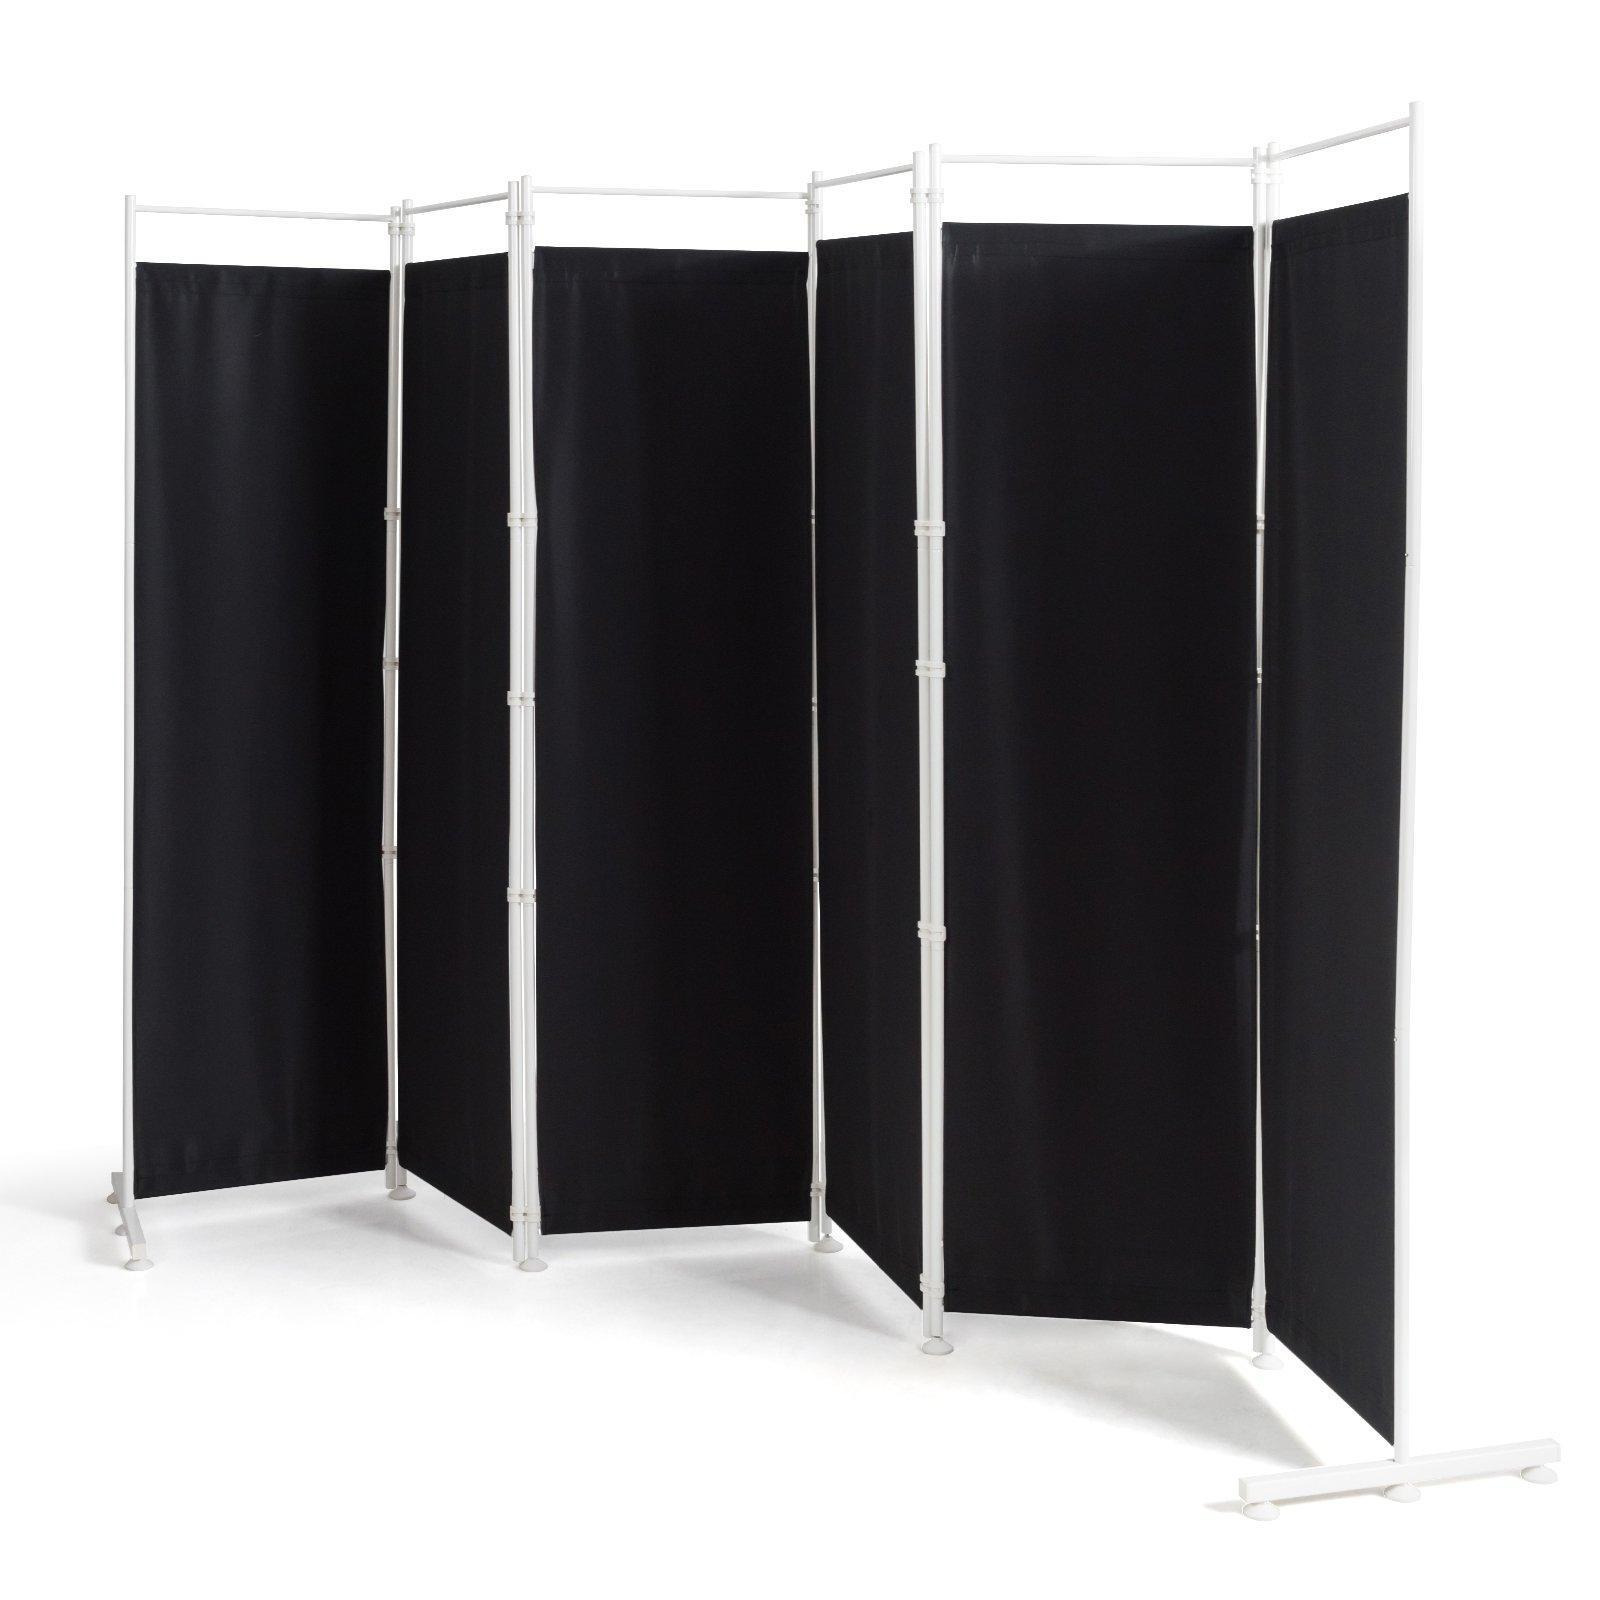 6-Panel Folding Room Divider with Adjustable Foot Pads Black - image 1